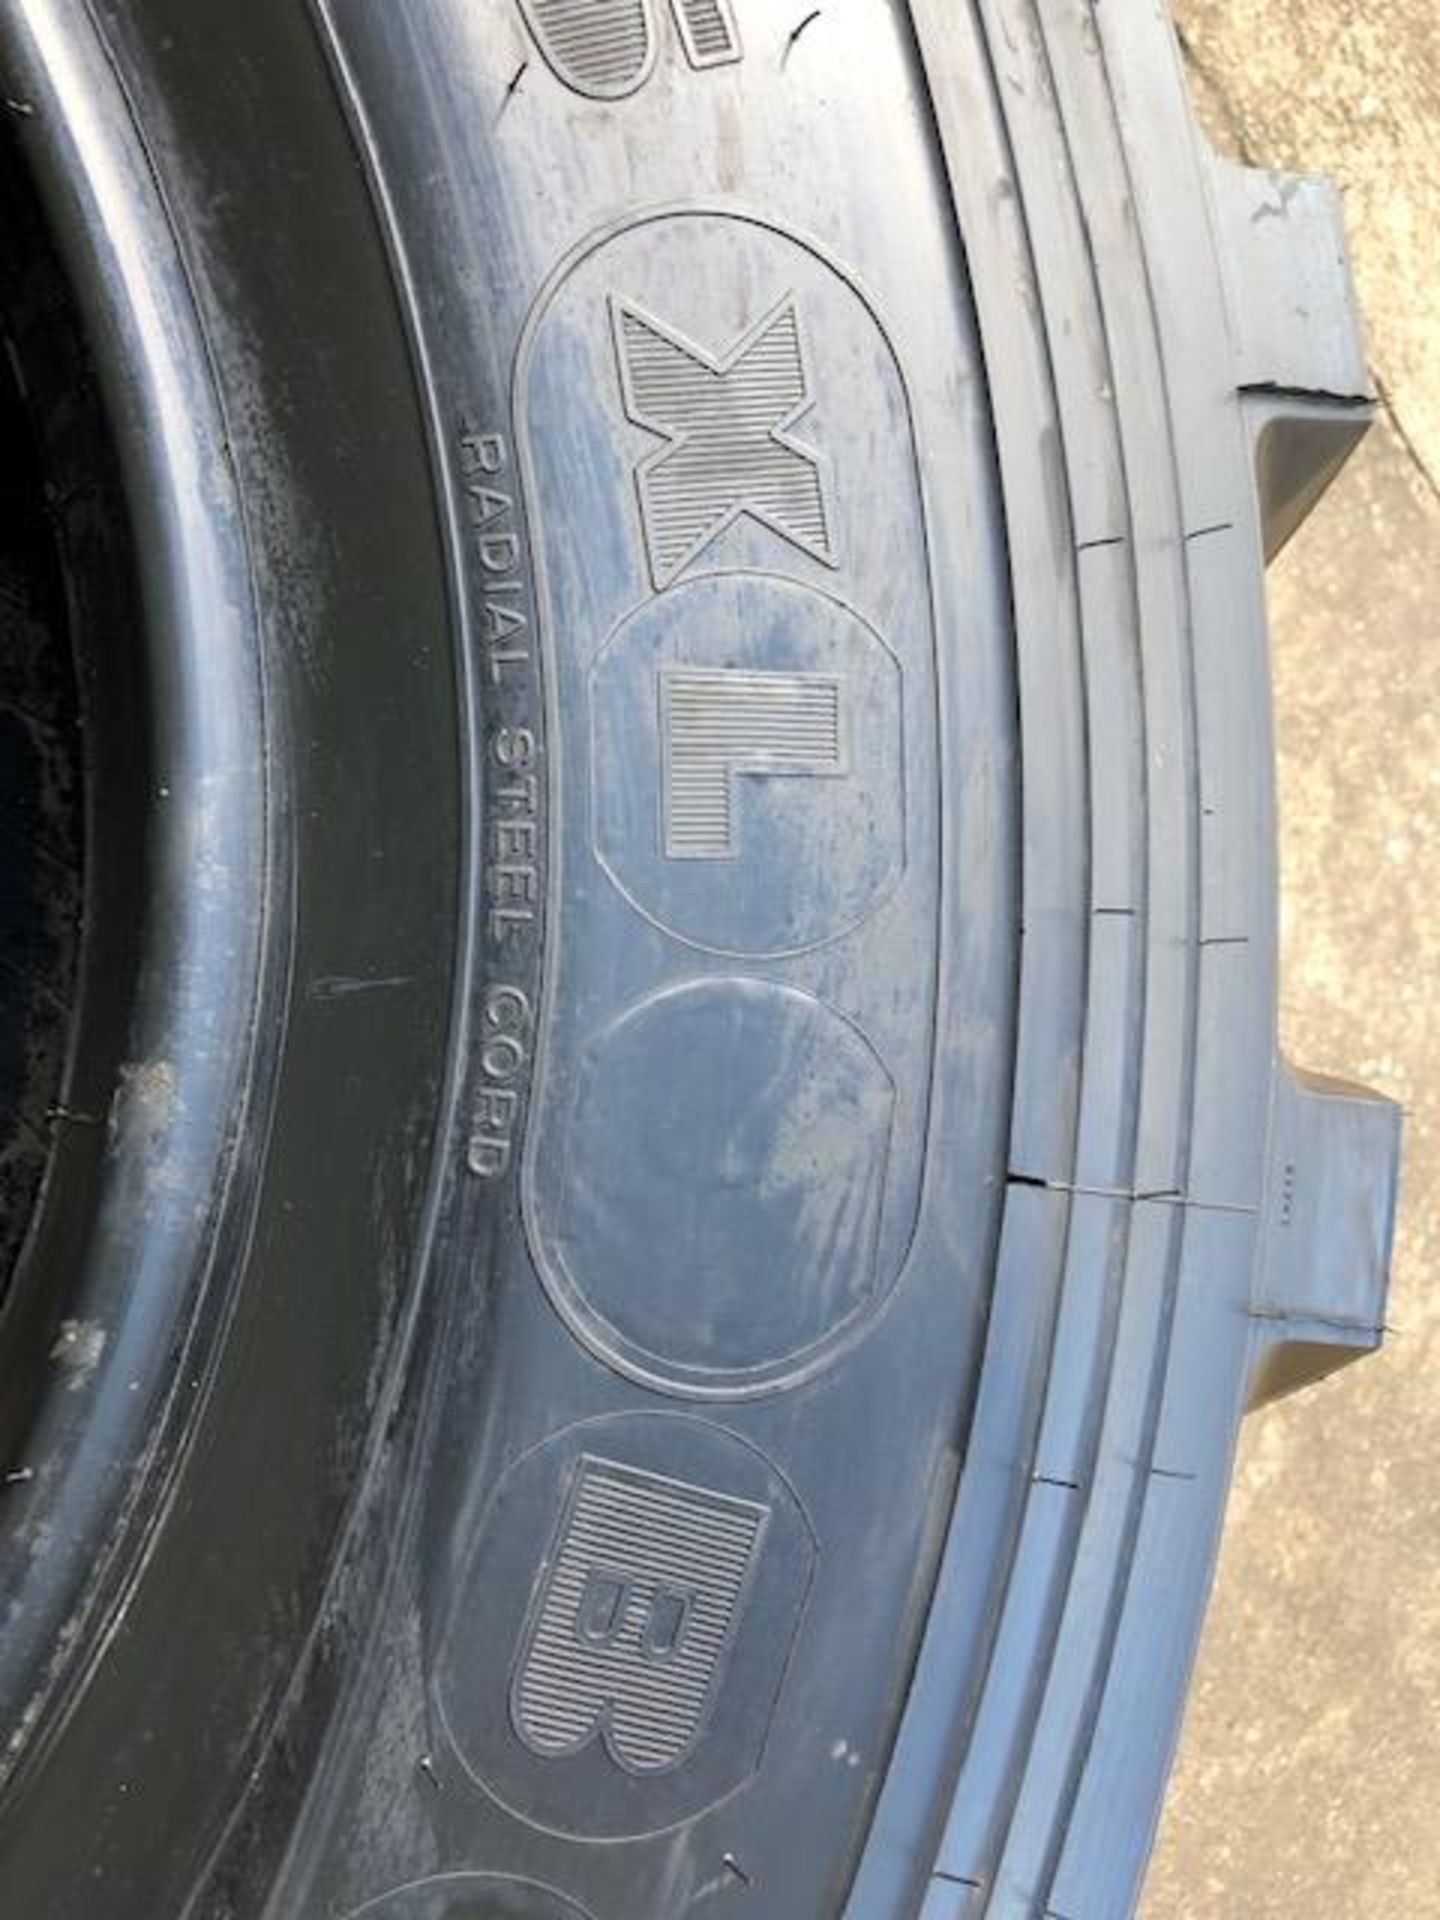 17.5 R (445 / 80 R 25) Michelin XLB Tyre unused. - Image 5 of 8